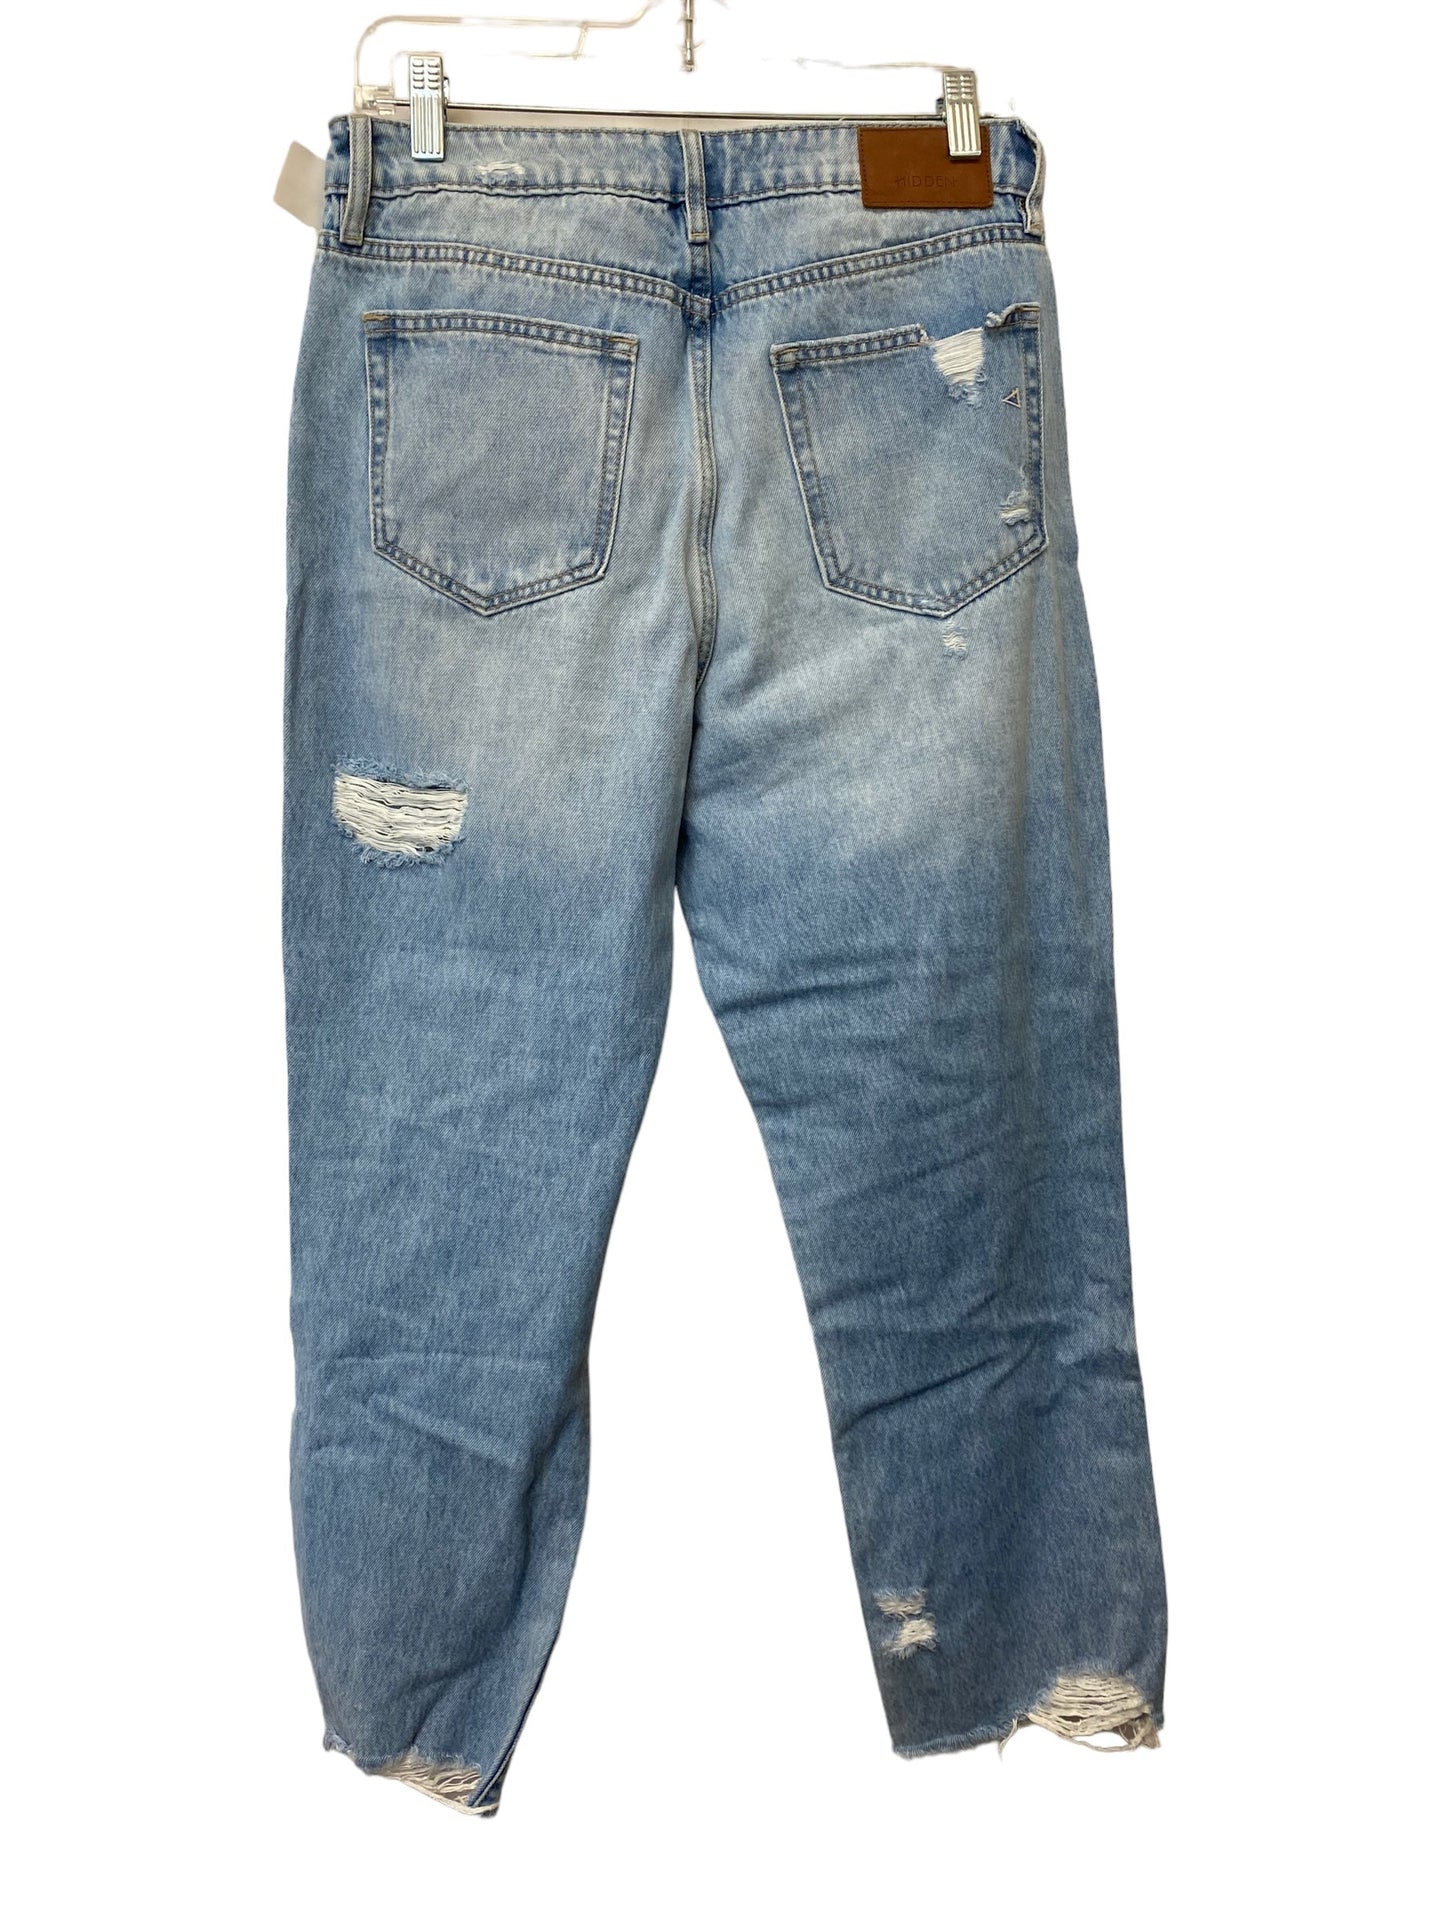 Jeans Boyfriend By Clothes Mentor  Size: 28